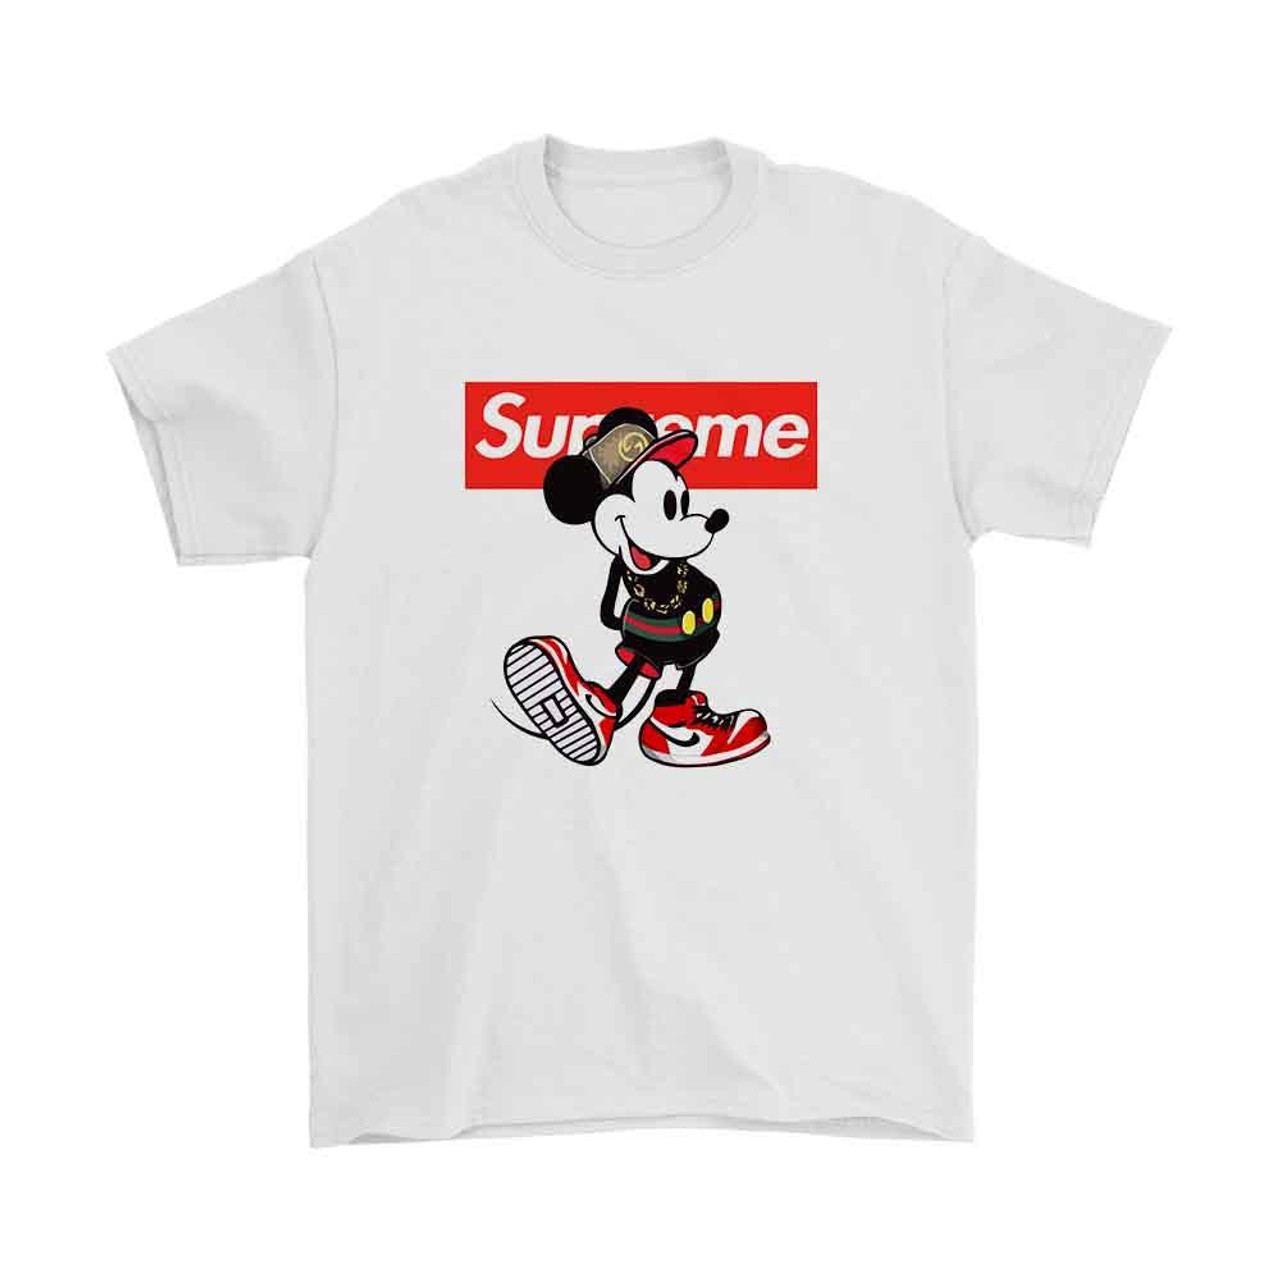 Supreme Mickey Mouse Man's T-Shirt Tee